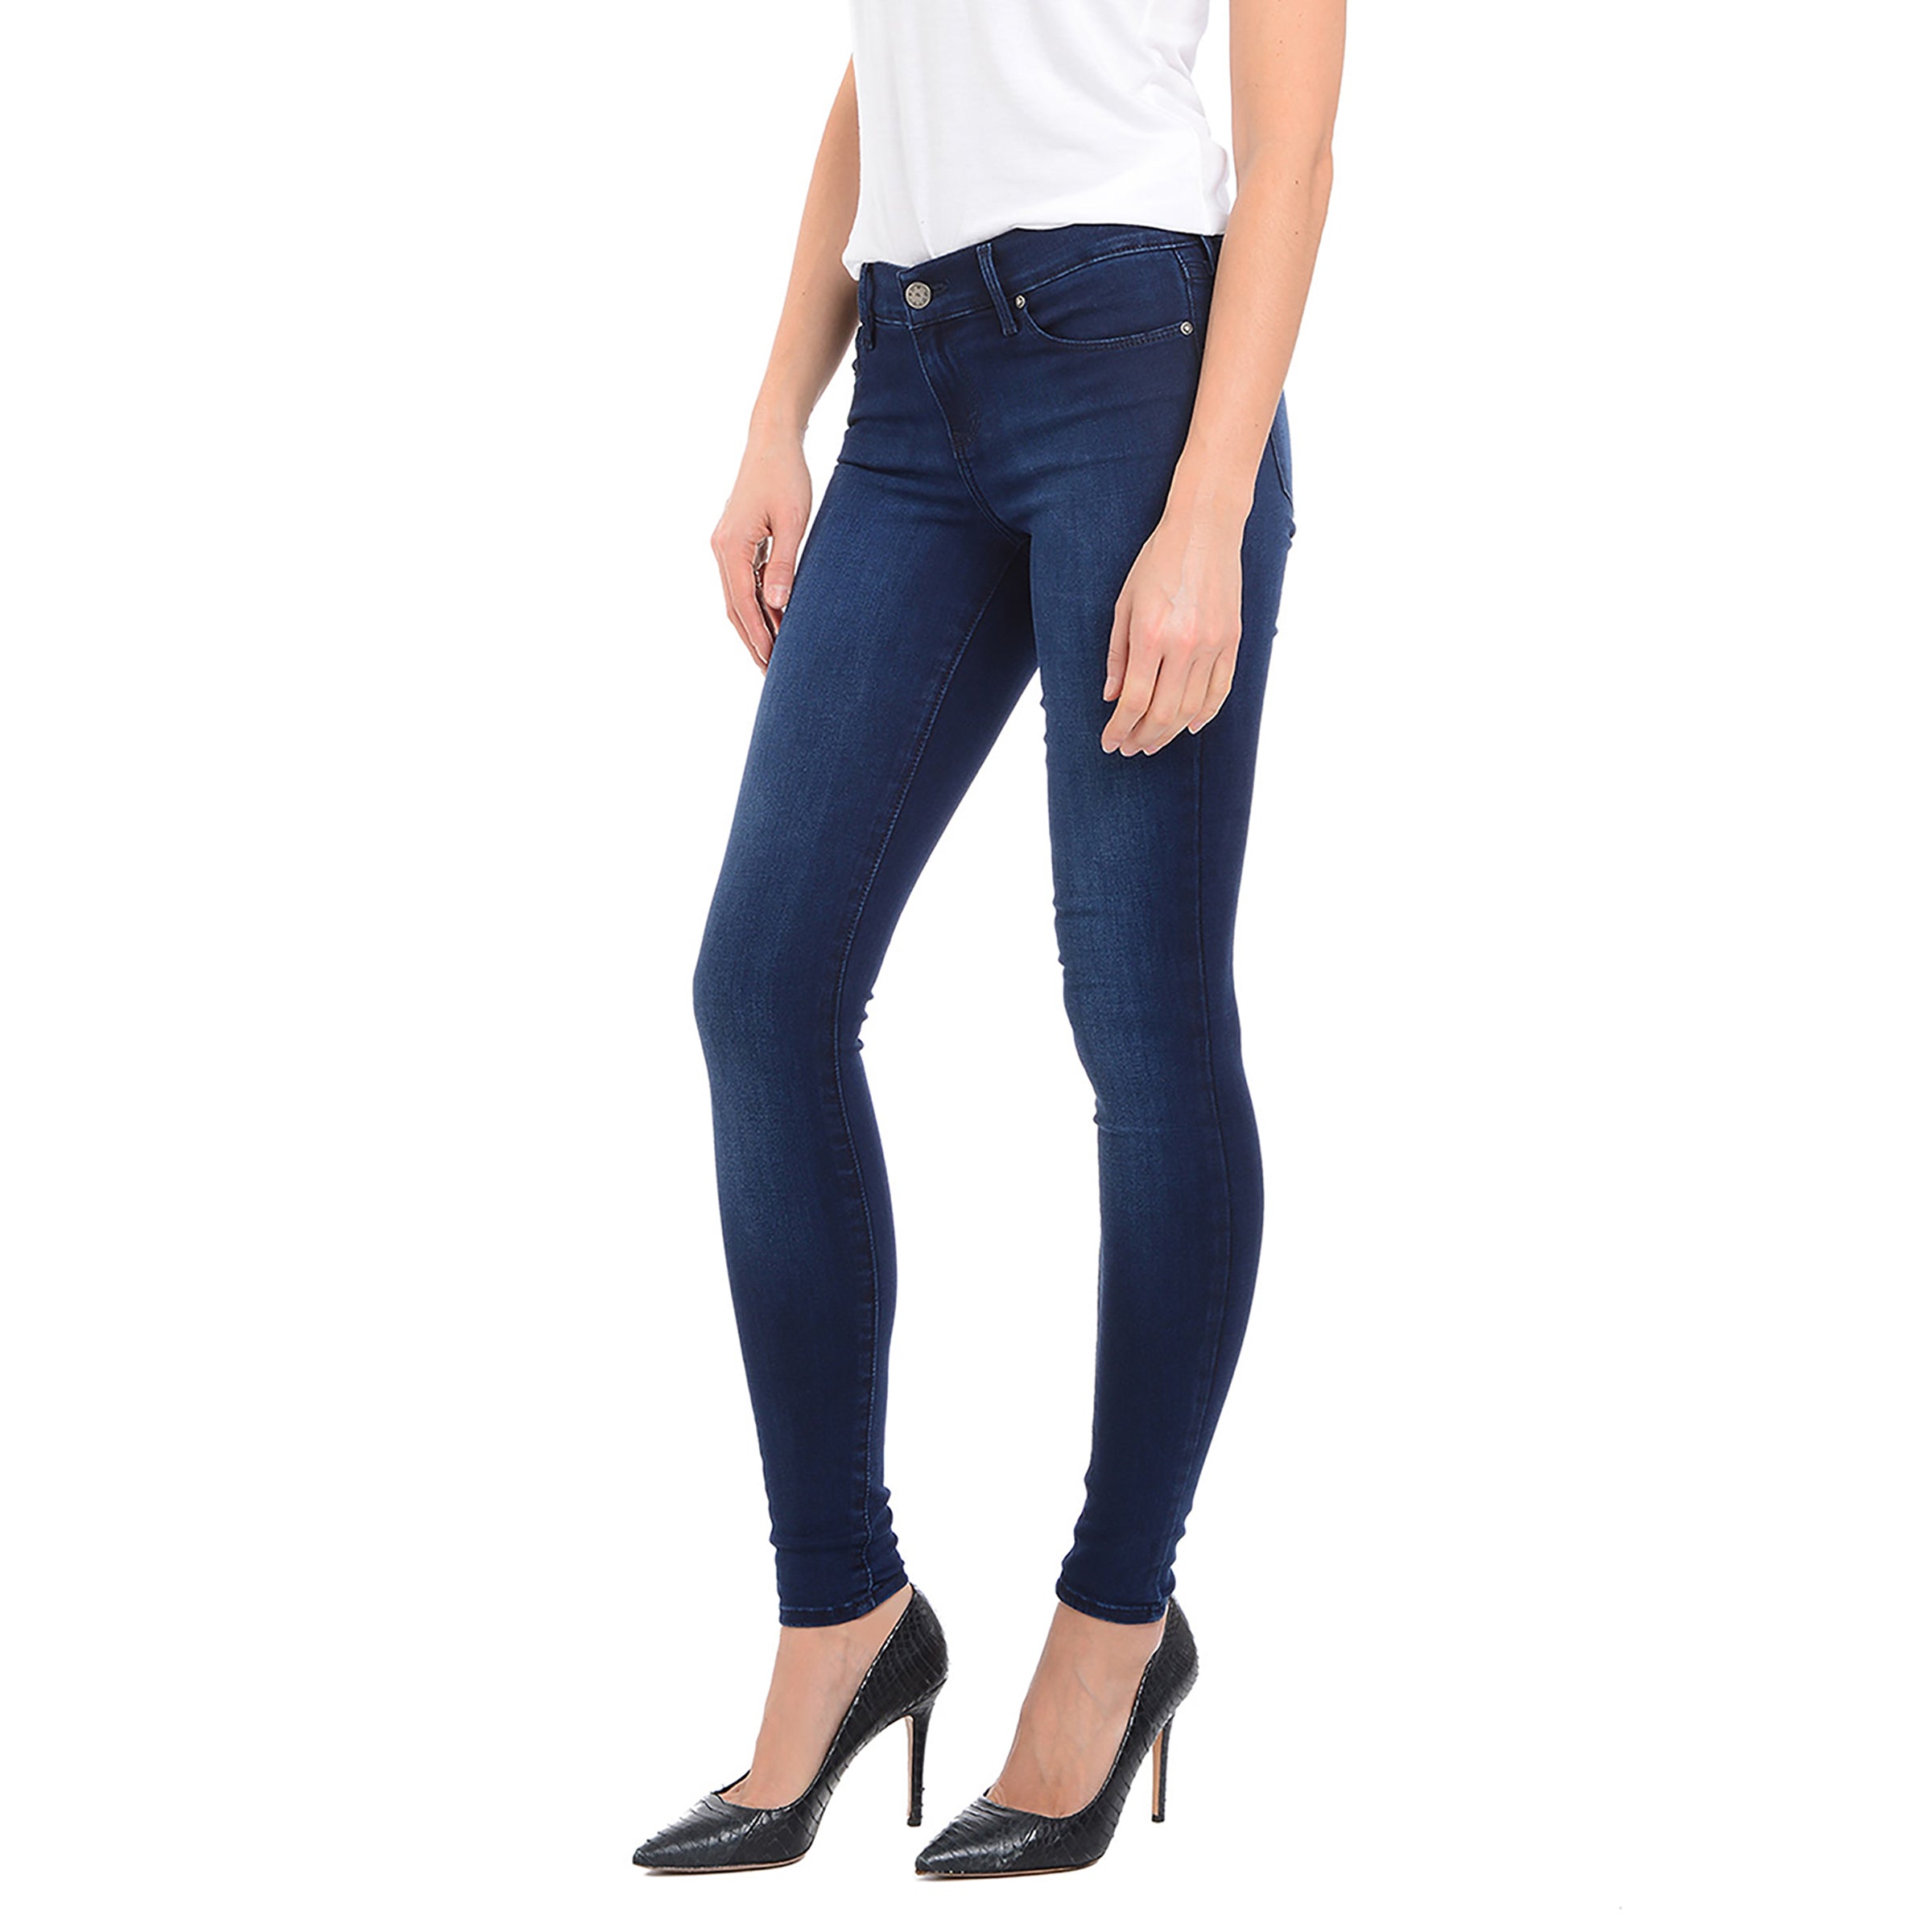 Women wearing Medium/Dark Blue Mid Rise Skinny Ann Jeans